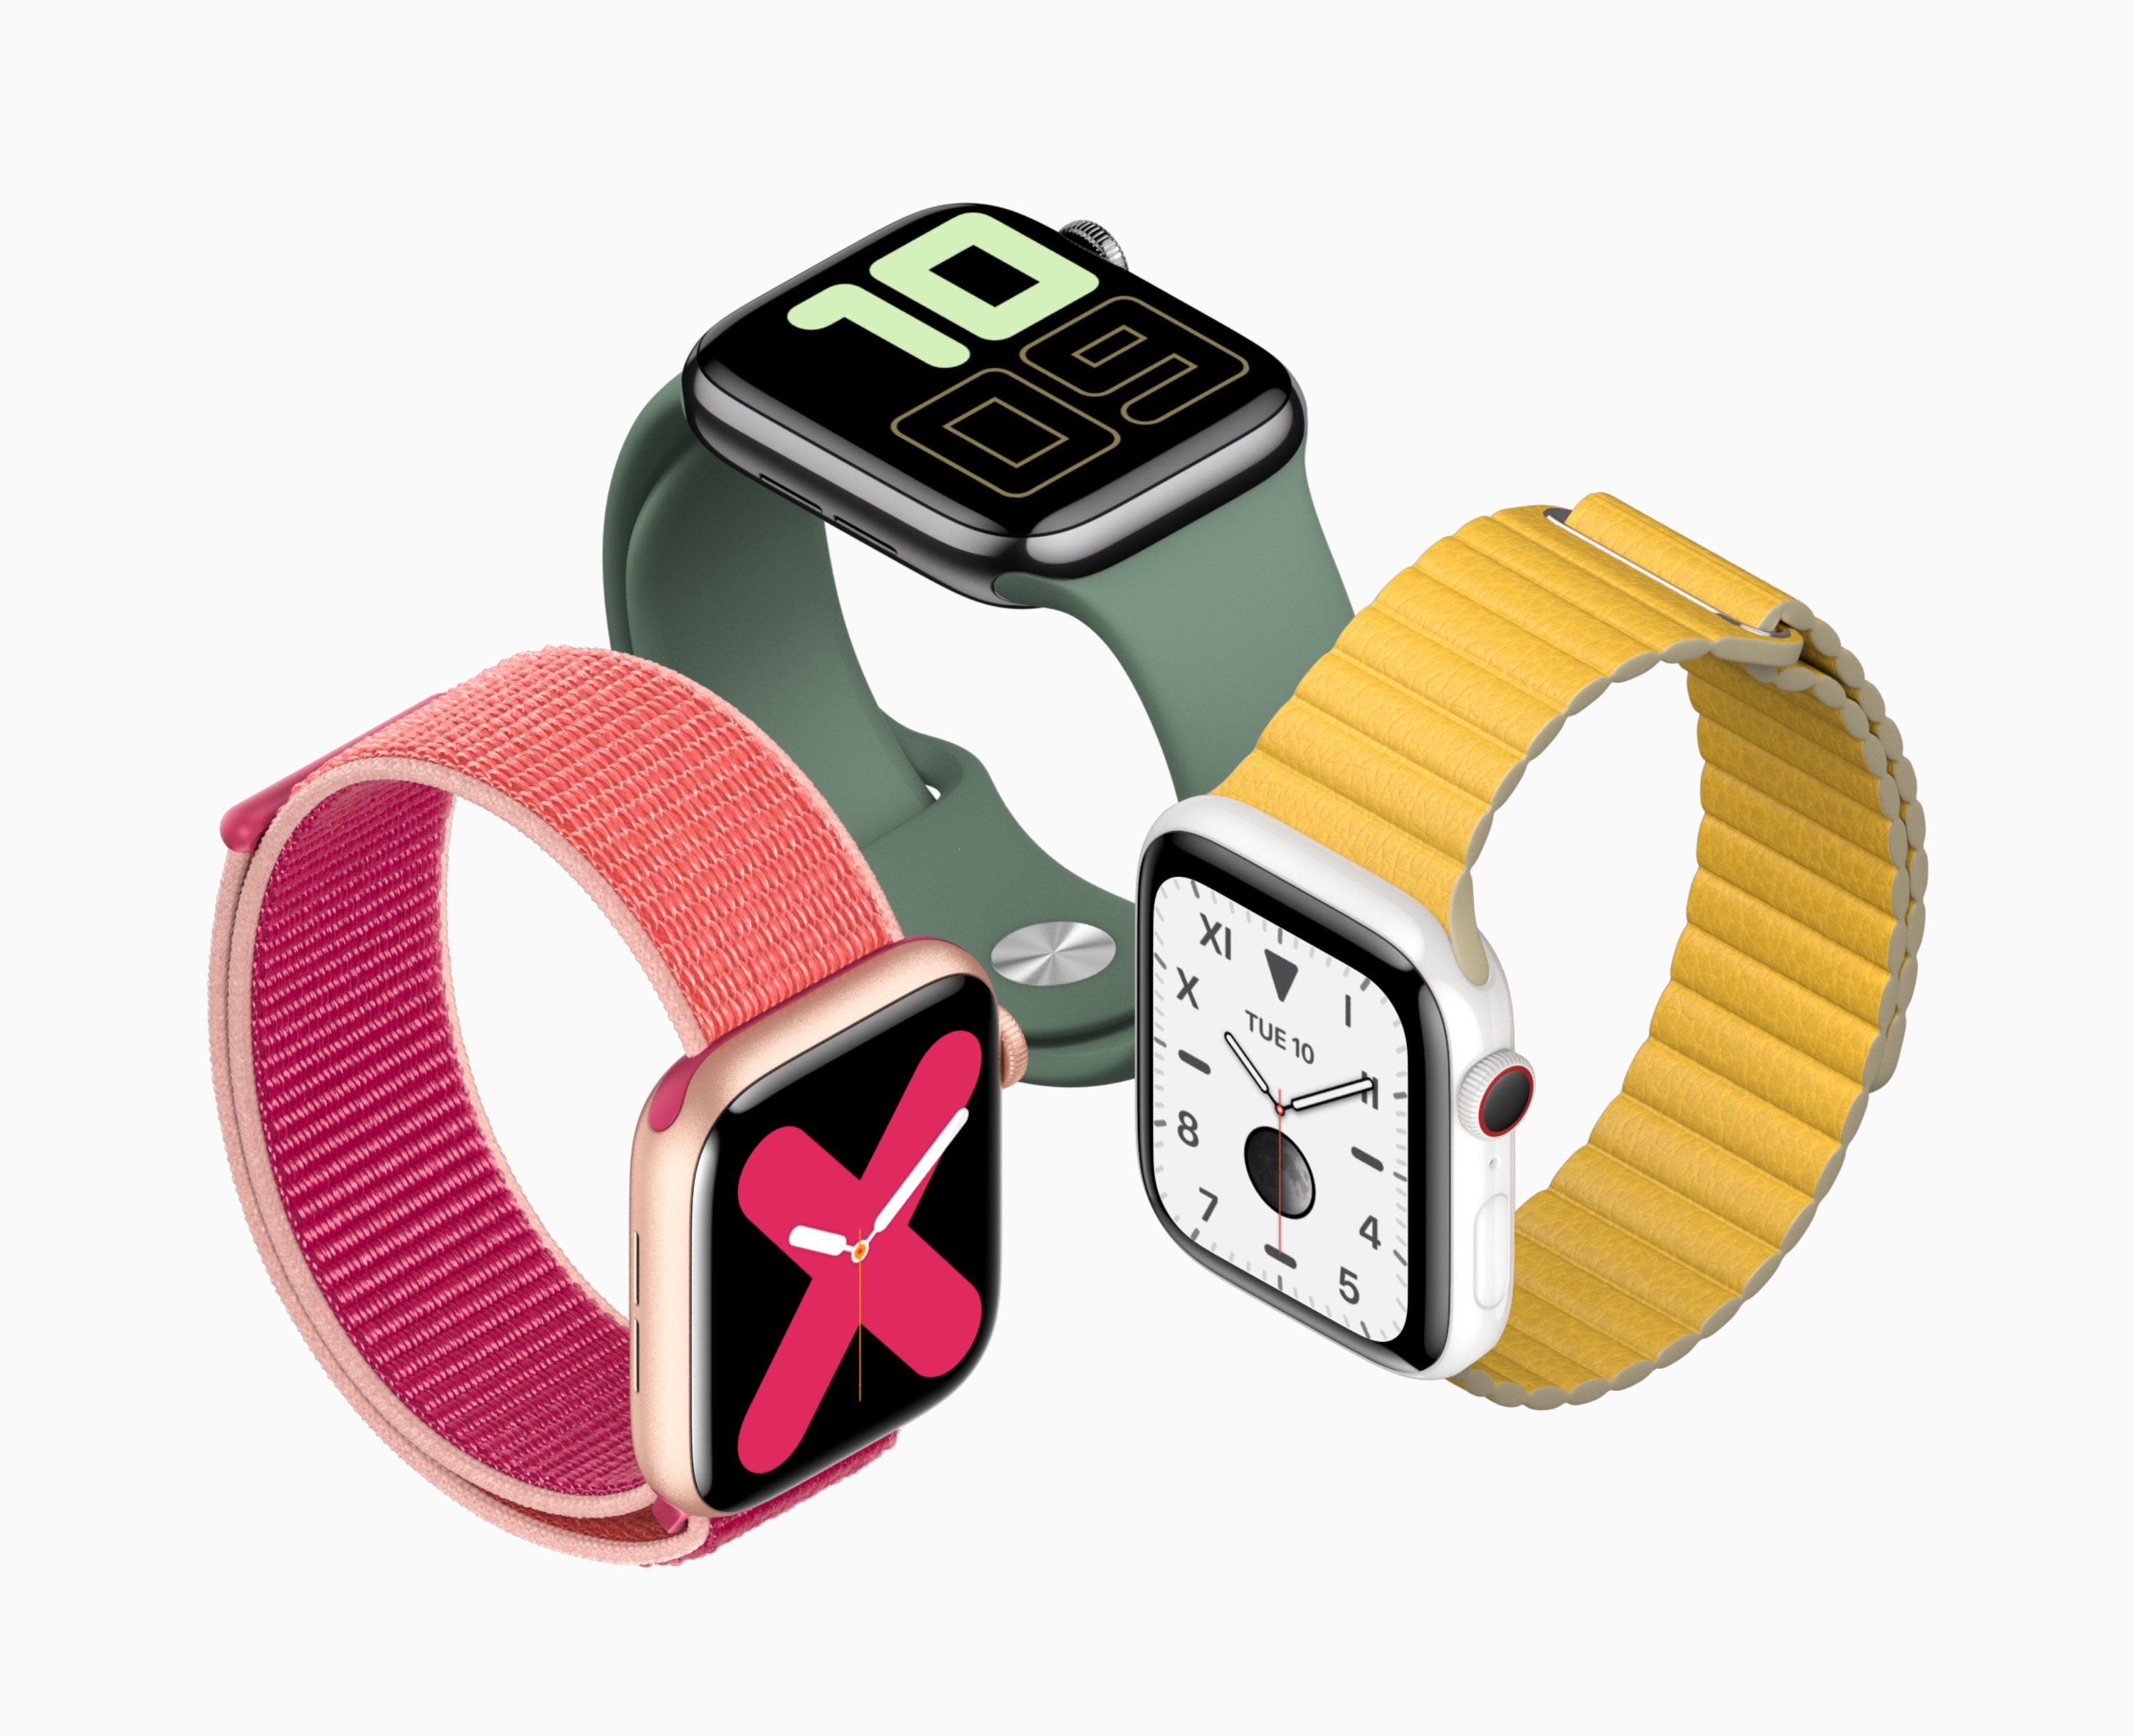 Apple Watch Series 5 tech specs